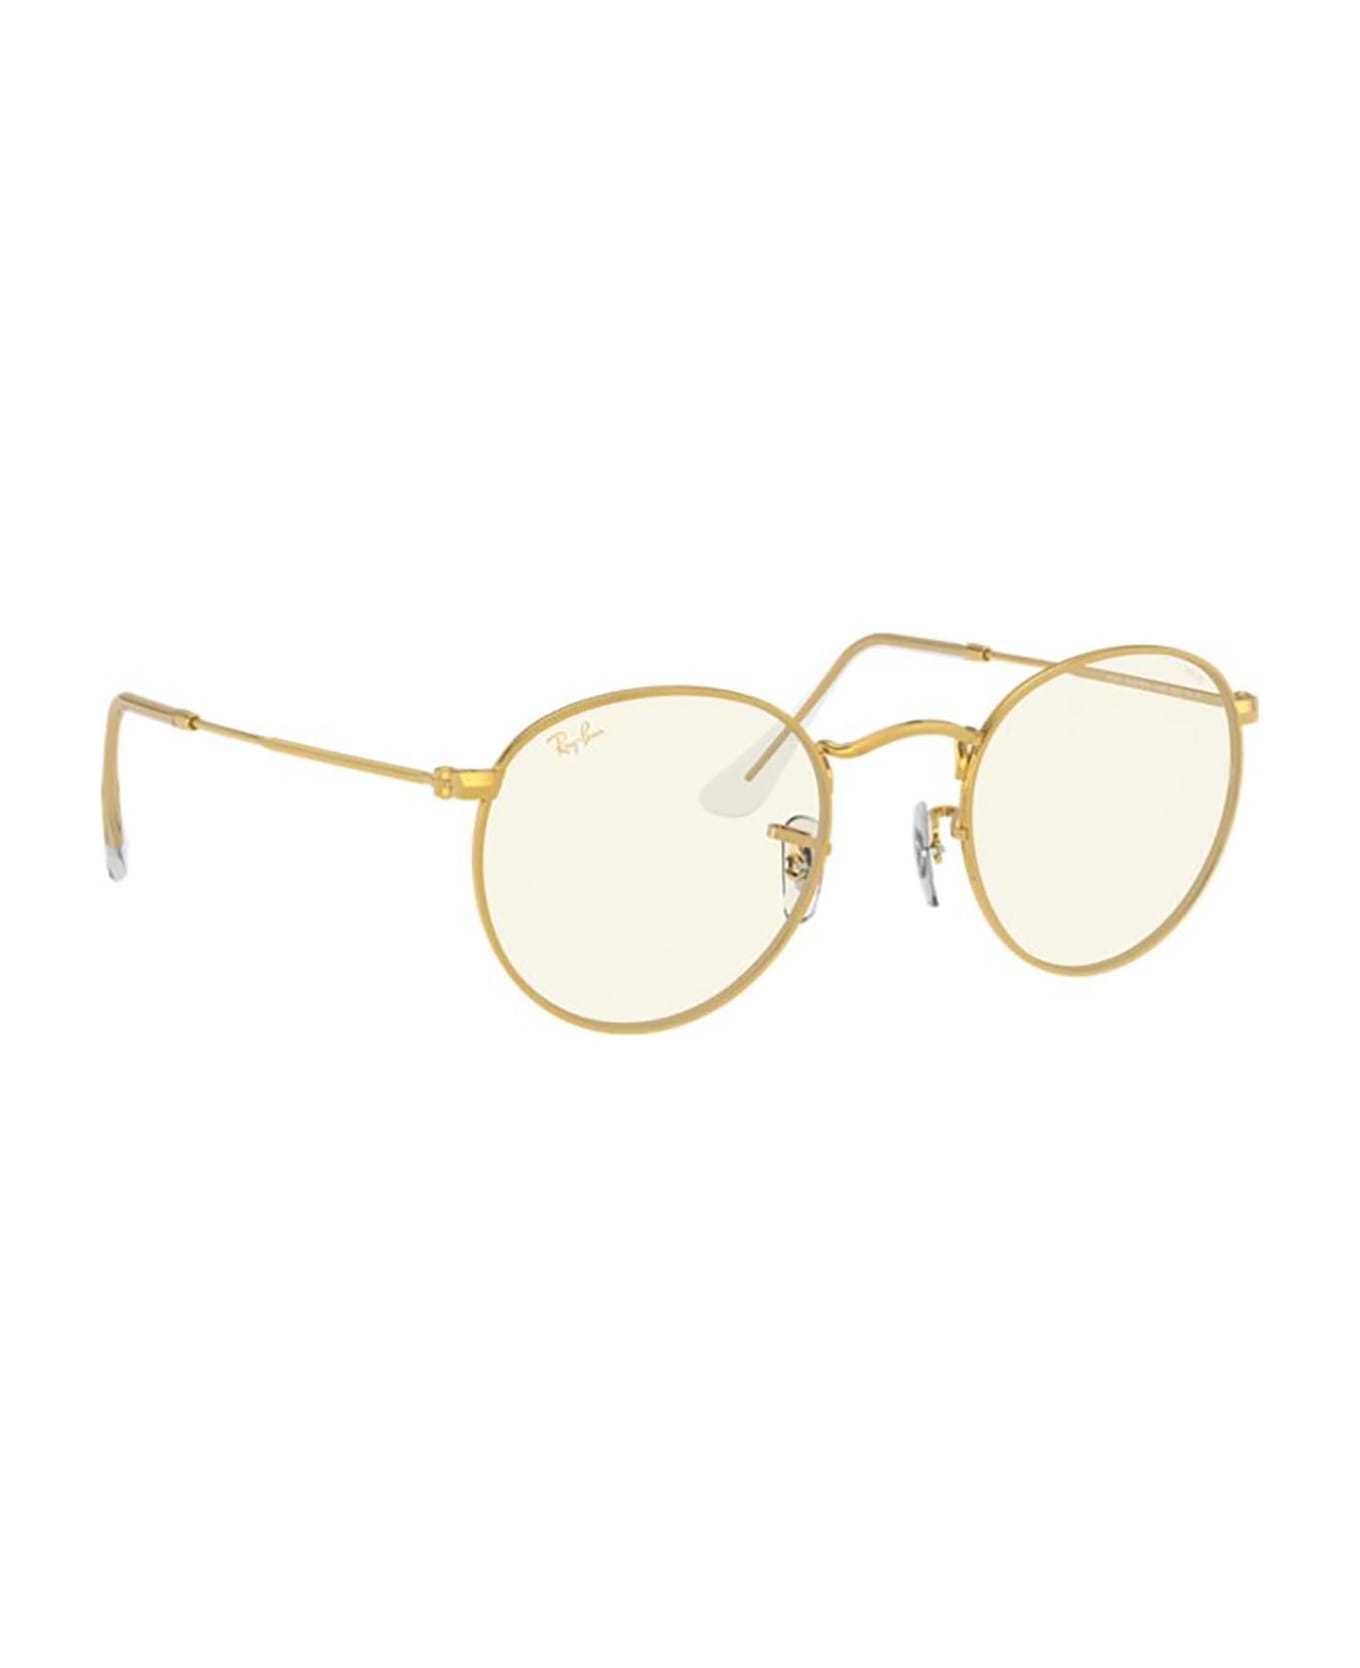 Ray-Ban Rb3447 Legend Gold Pillow Sunglasses - LEGEND GOLD